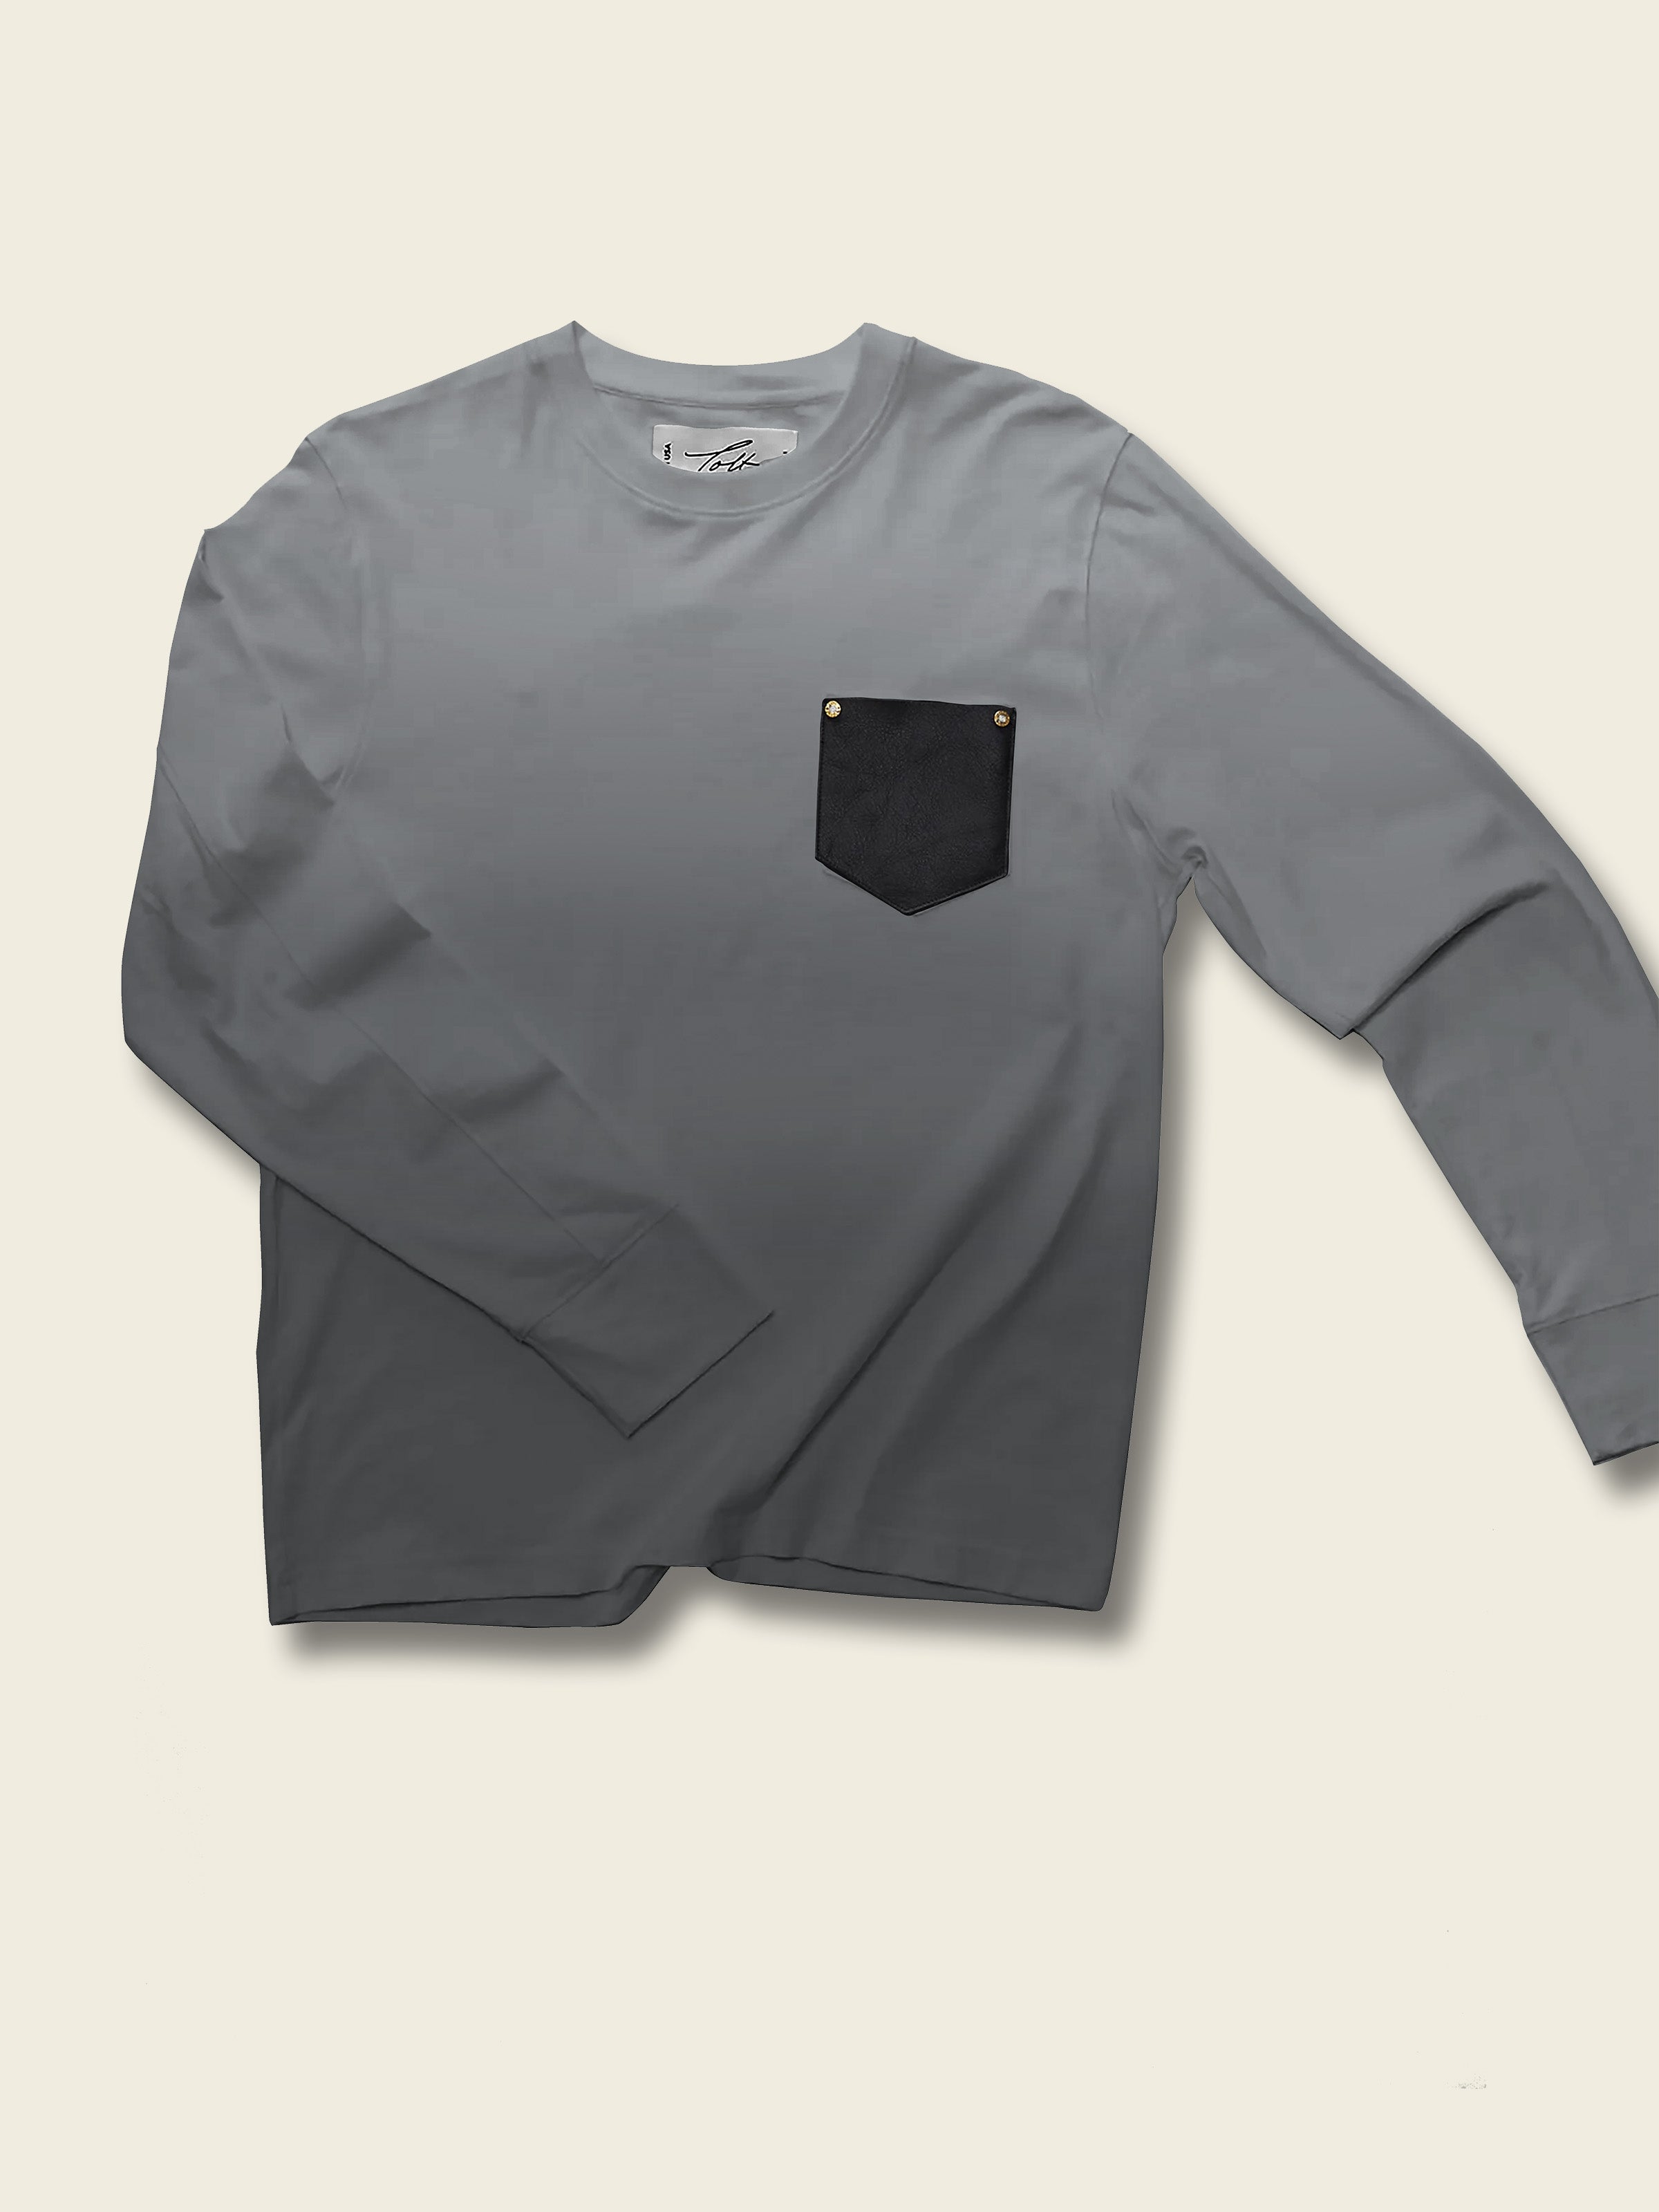 Long sleeve pocket t-shirt in Sun Faded Gray